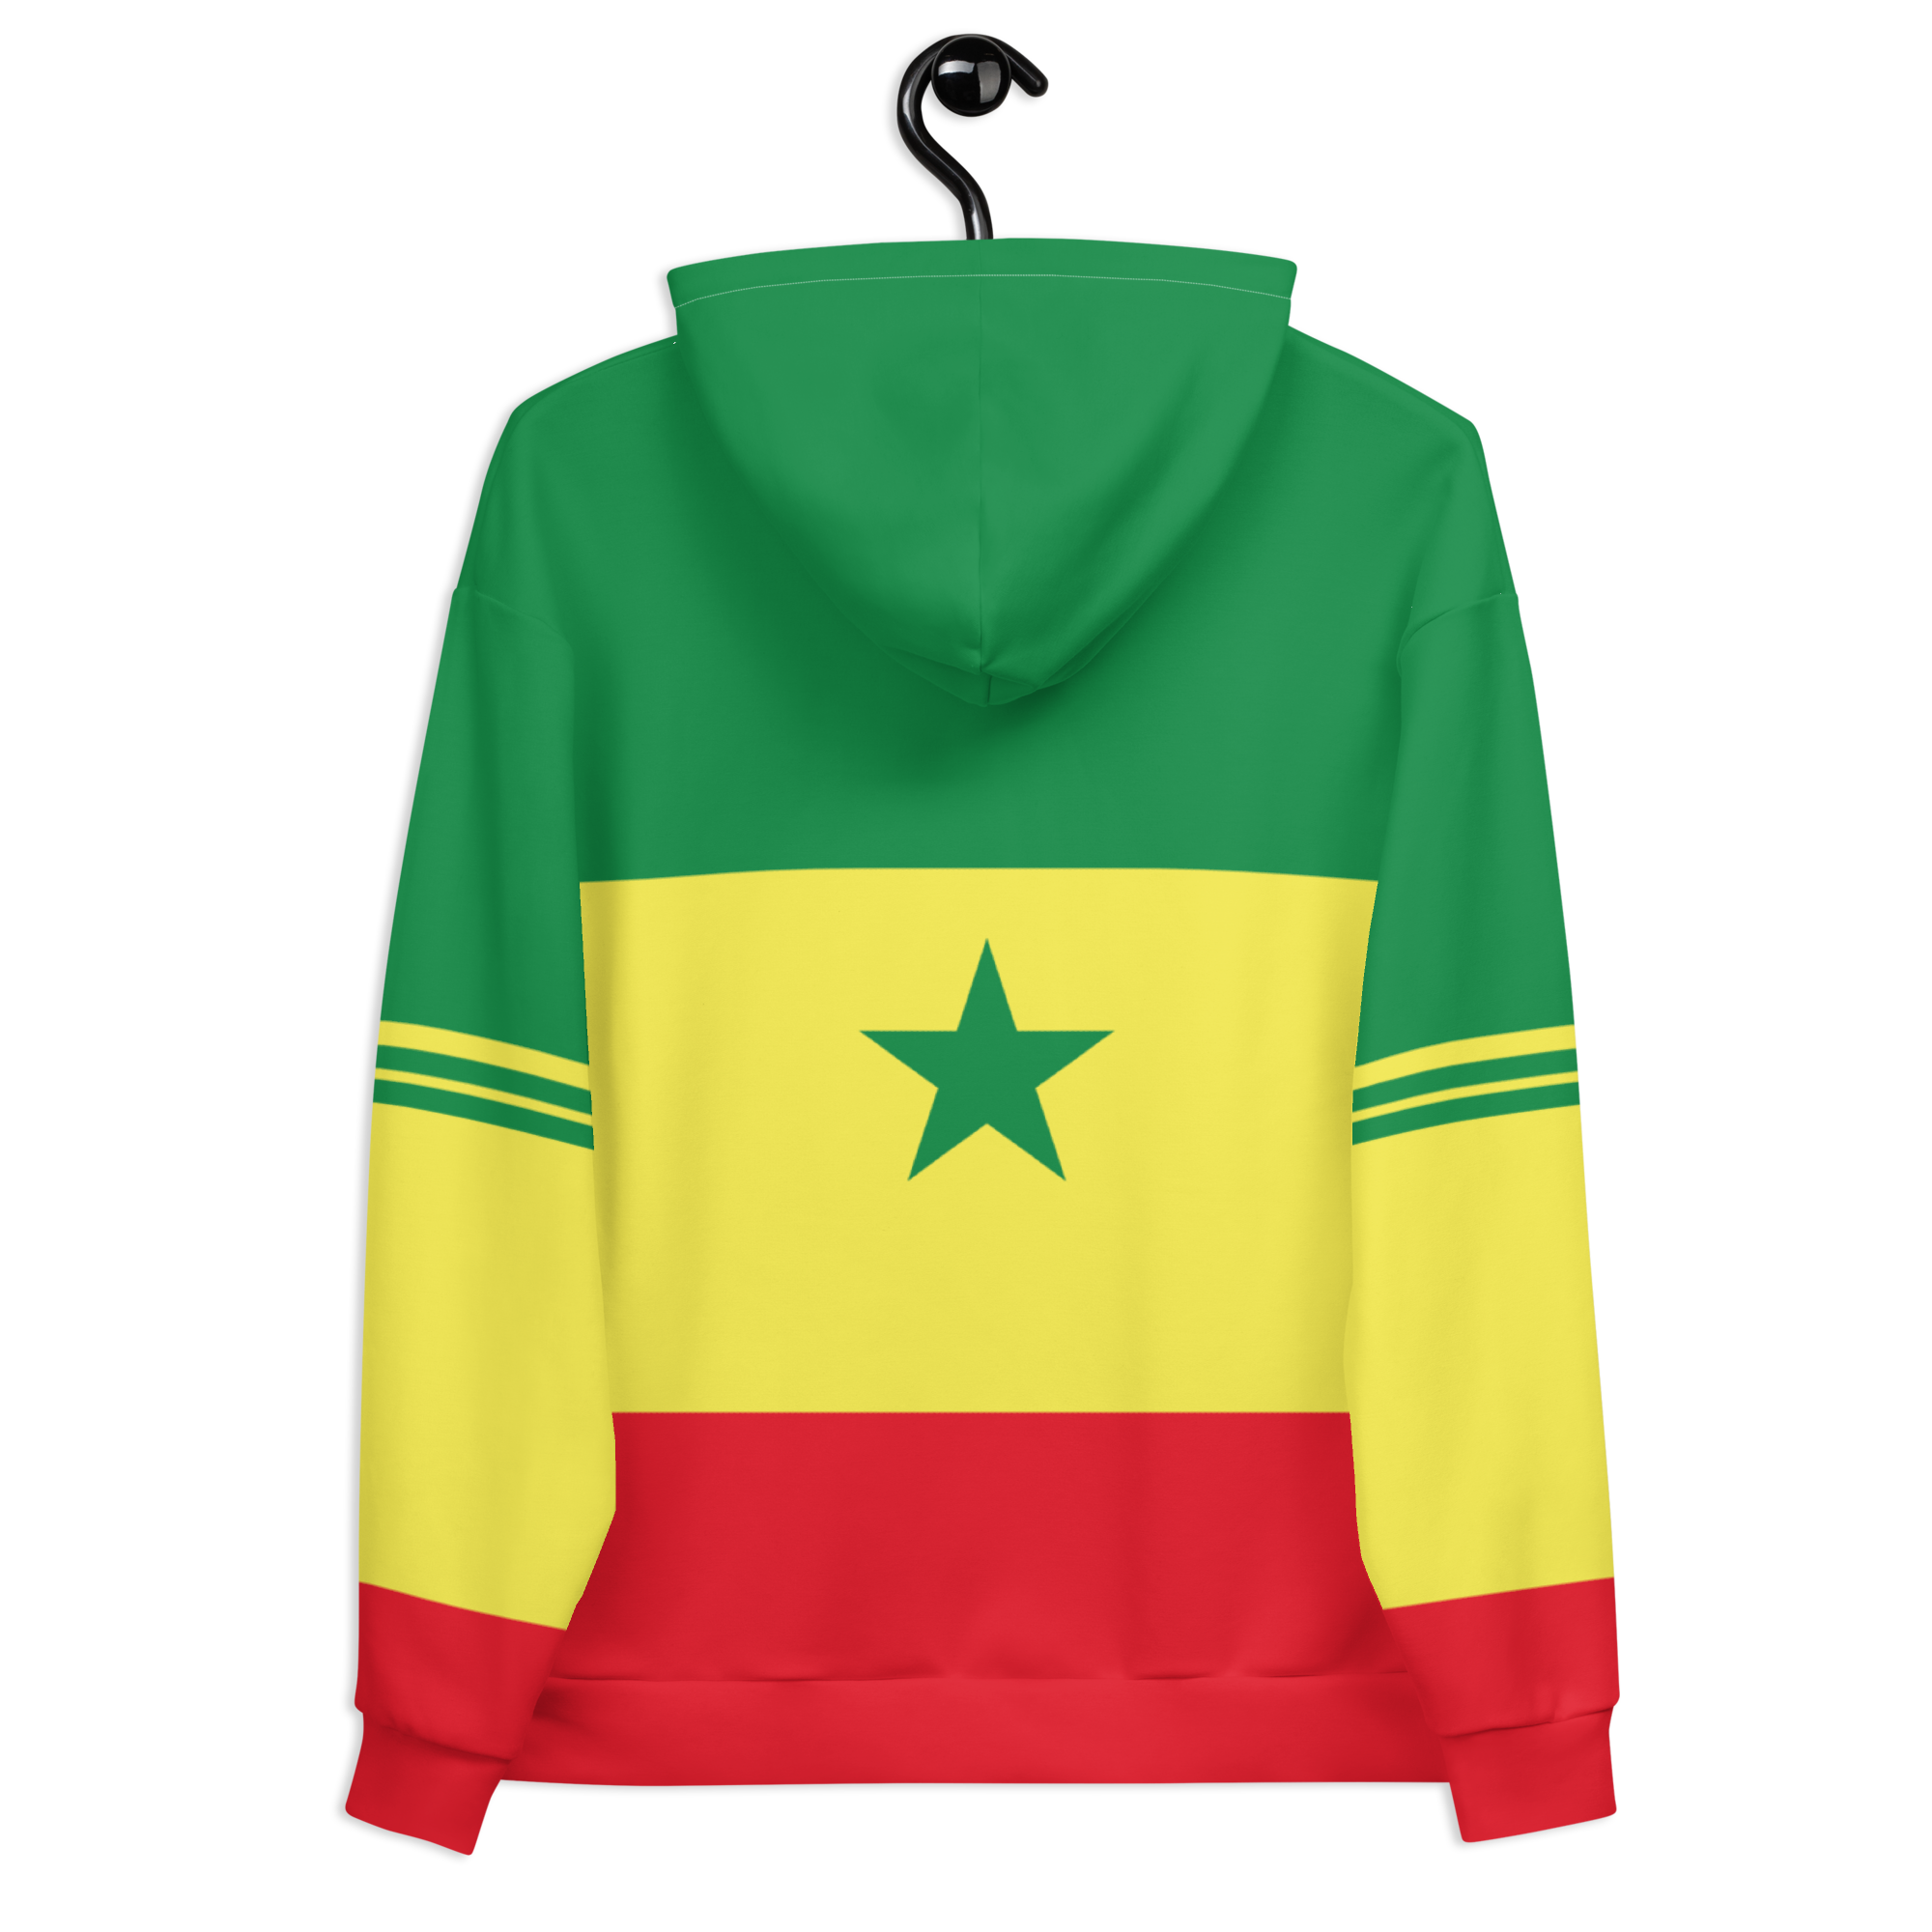 Senegal Flag Inspired volleyball sweatshirt designs sold in my Volleybragswag Etsy shop.